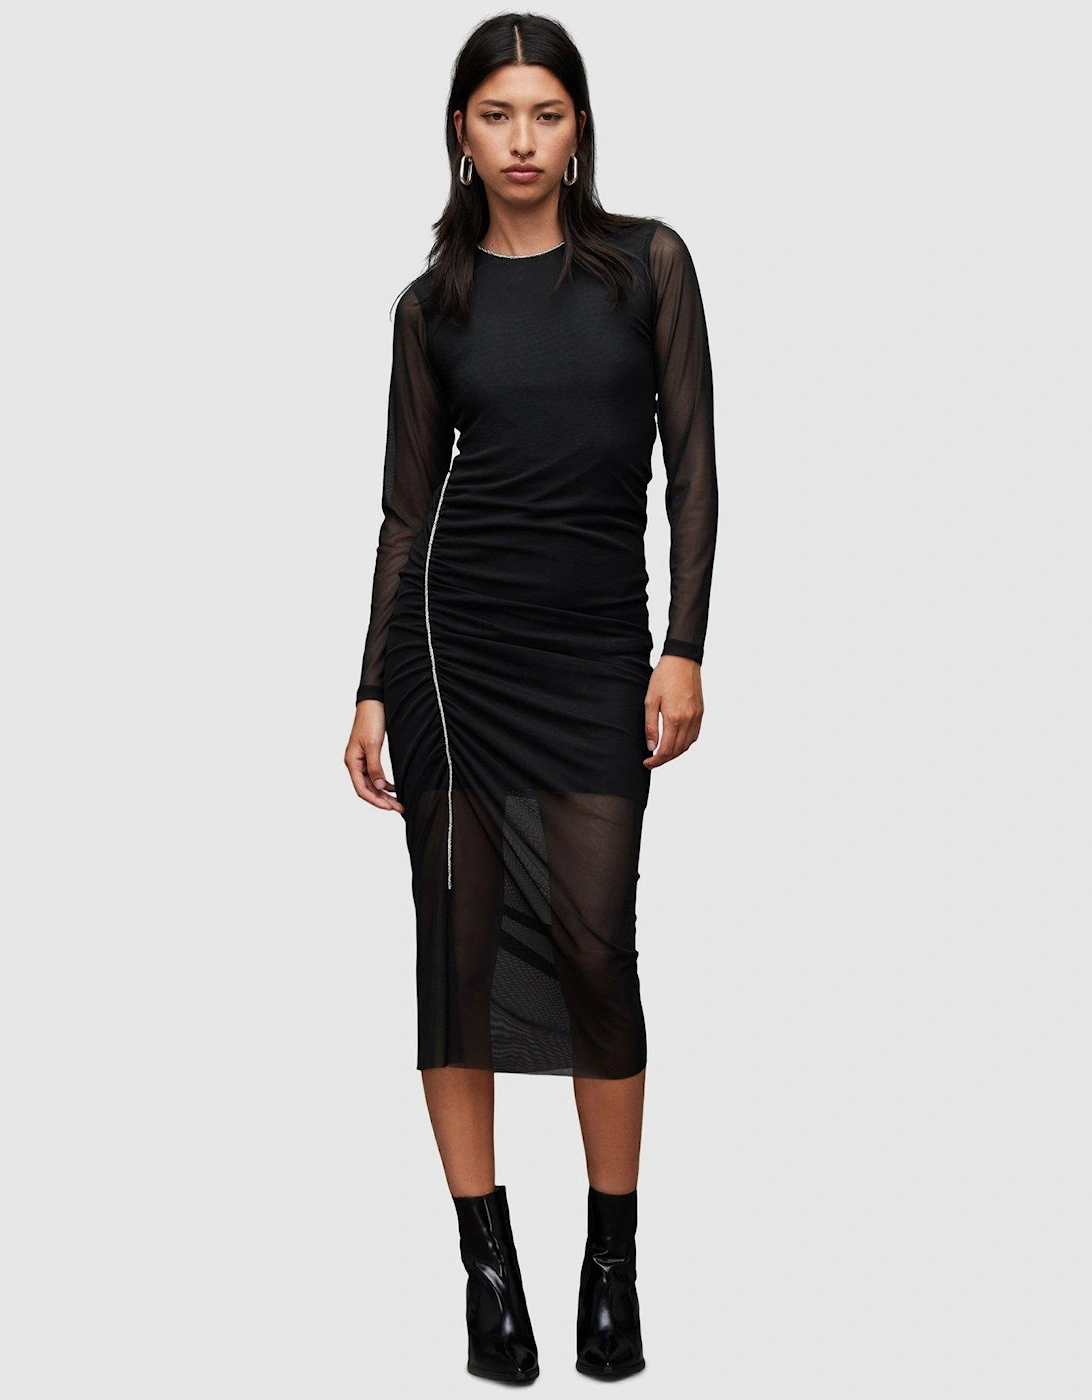 Nora Sparkle Dress - Black, 3 of 2